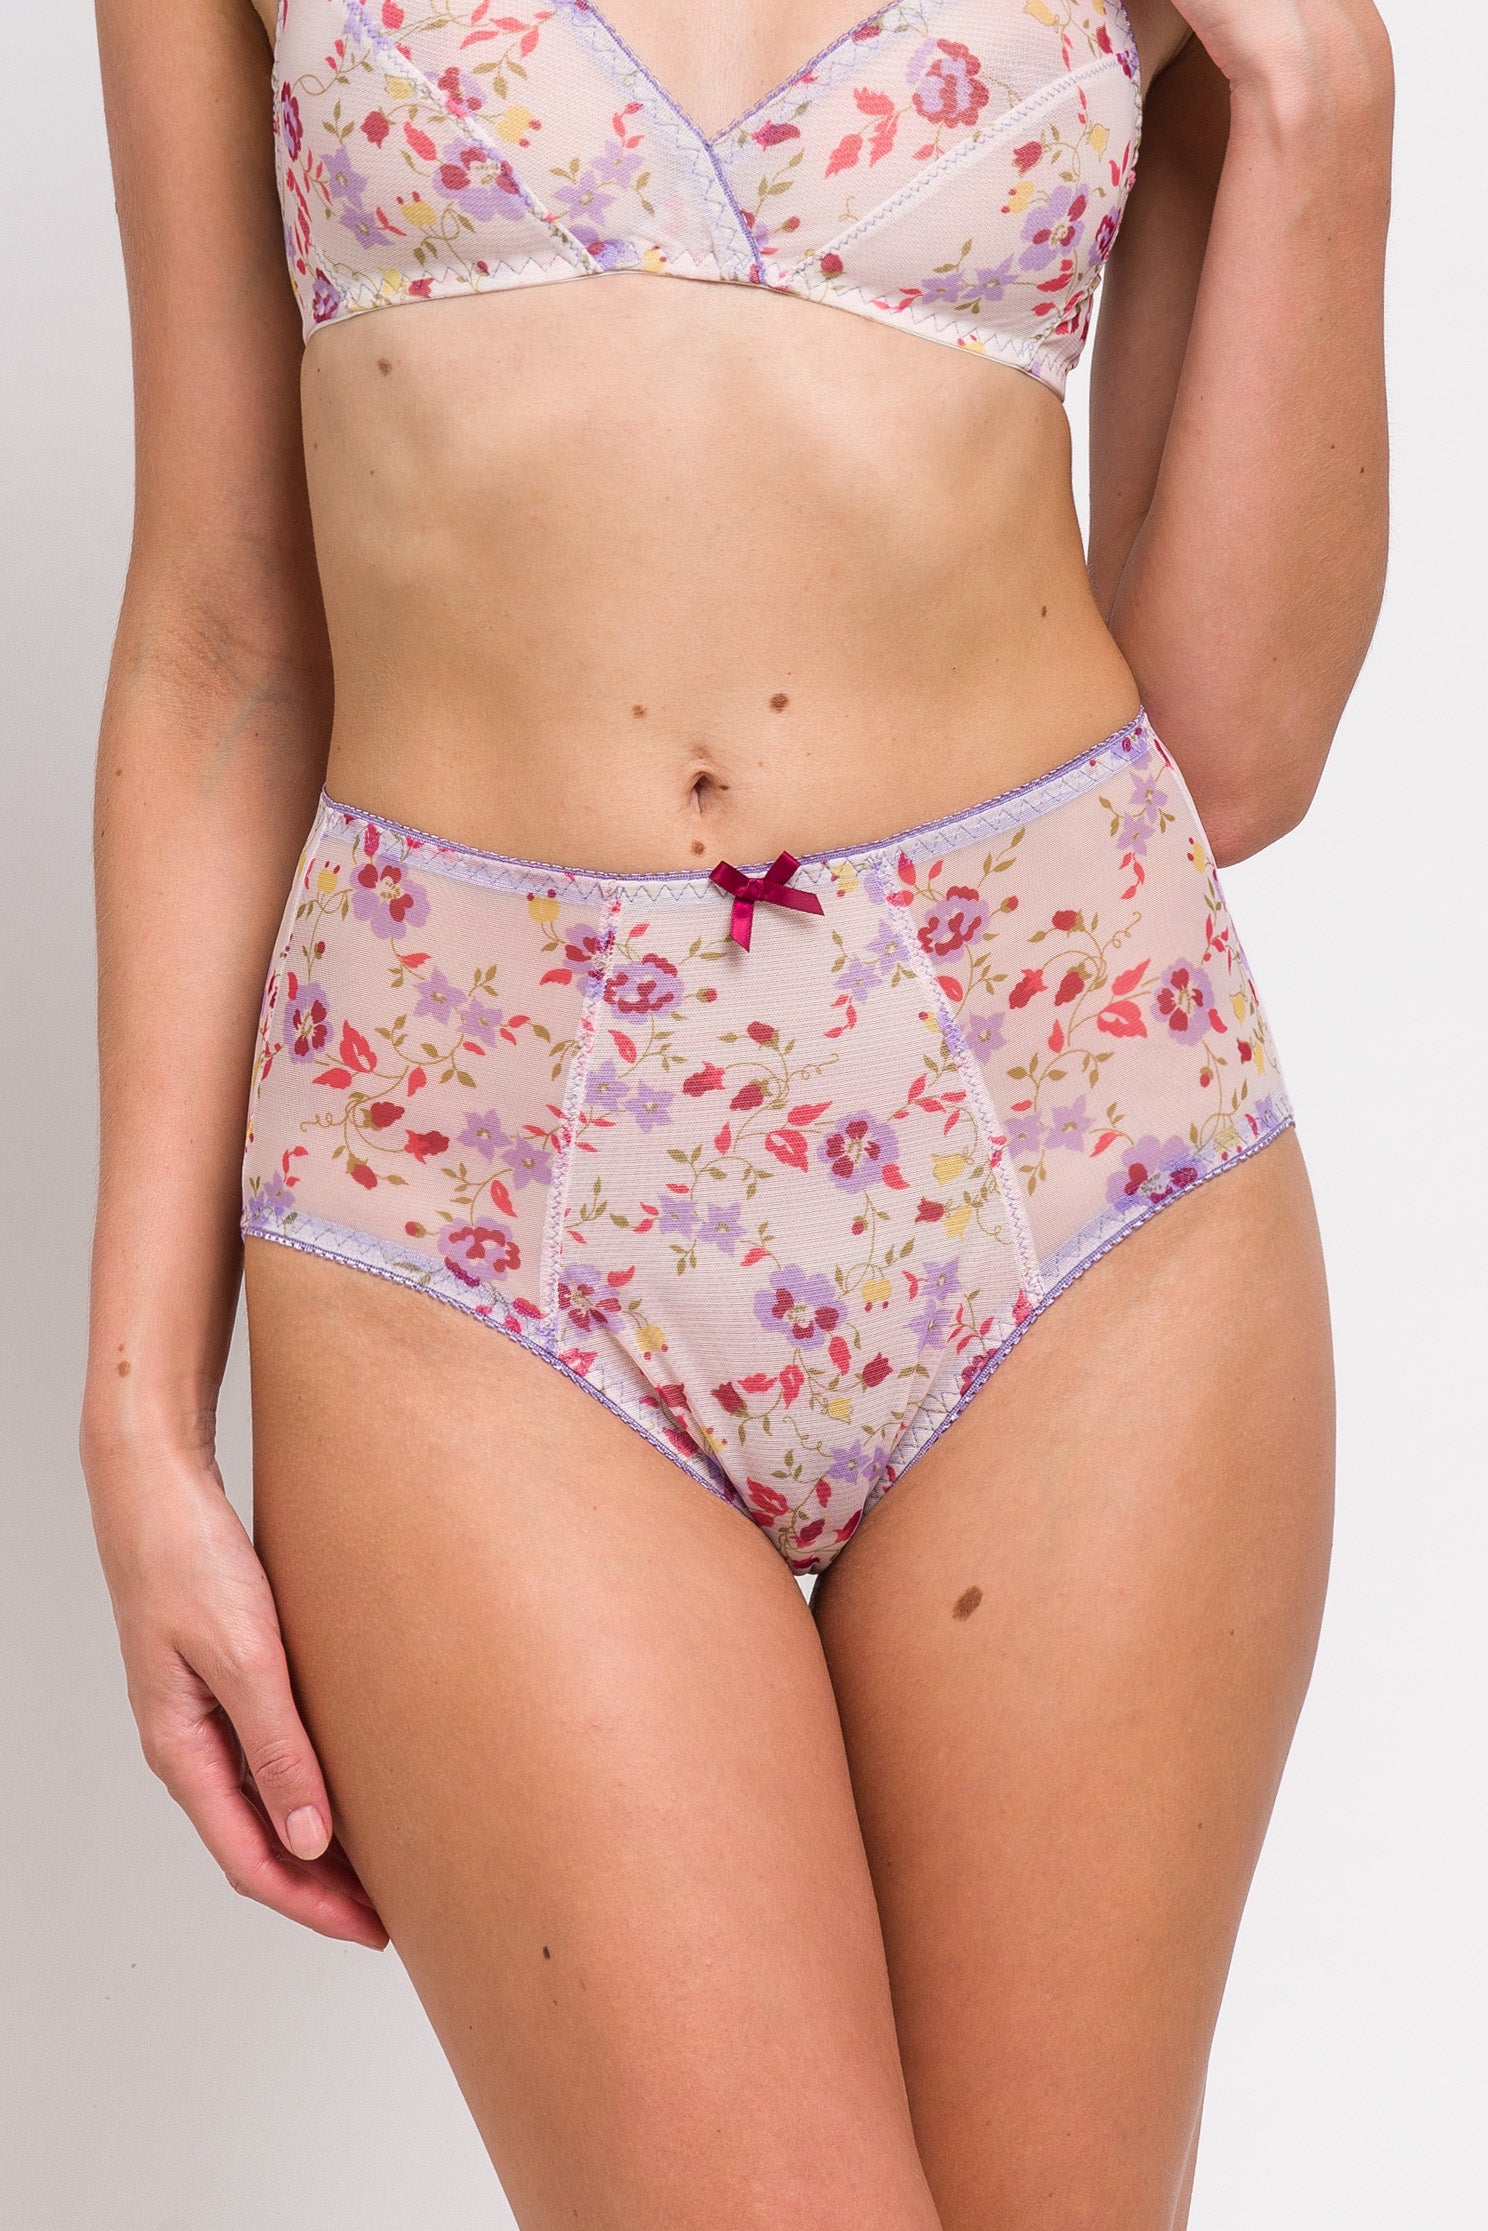 Vintage inspired lingerie set with hi waist underwear and floral mesh bralette